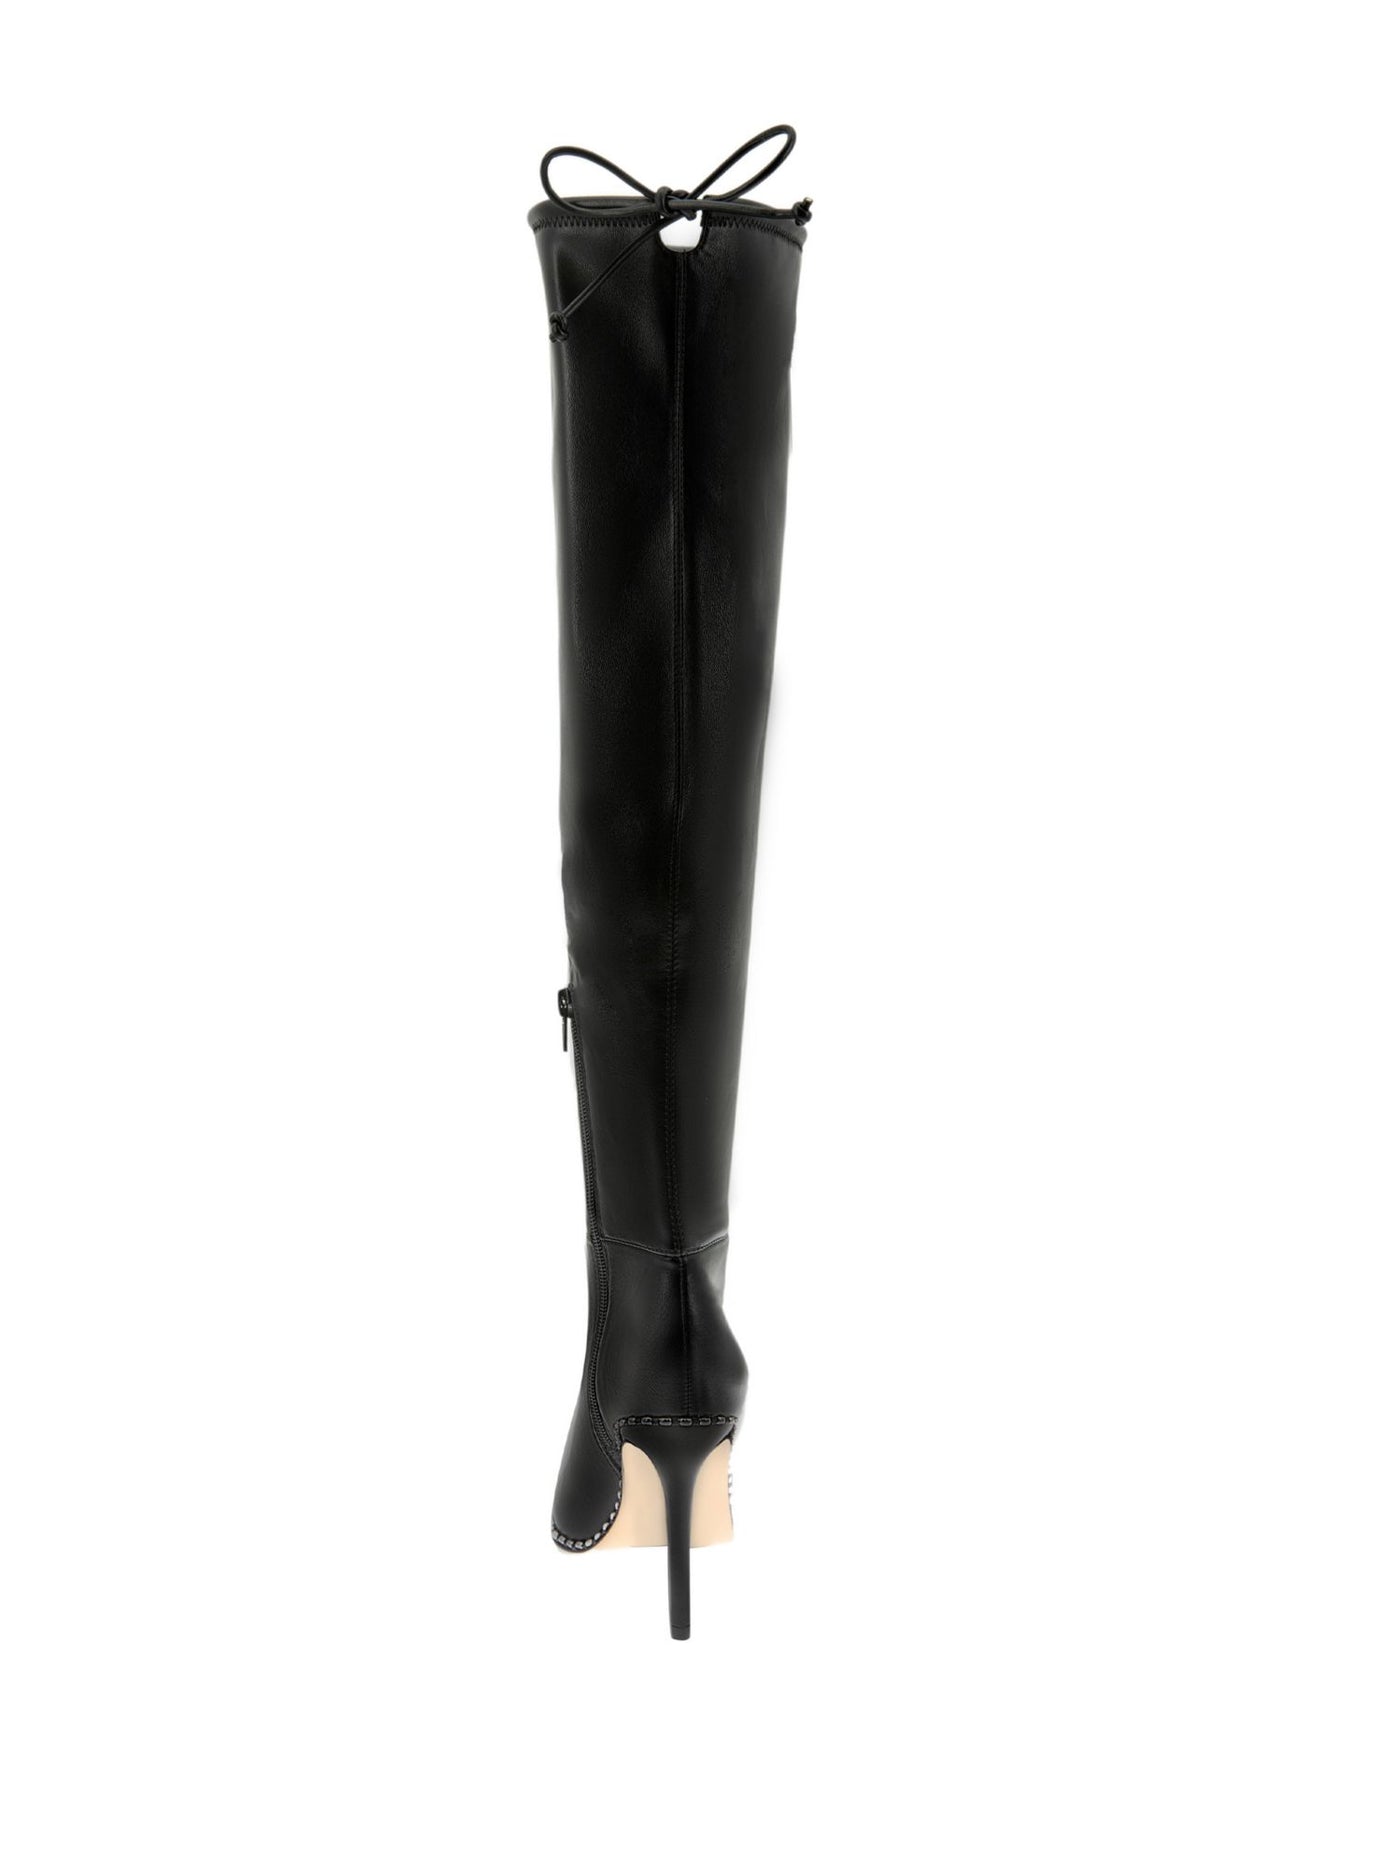 BCBGENERATION Womens Black Zipper Accent Hilanda Pointed Toe Stiletto Dress Boots 6.5